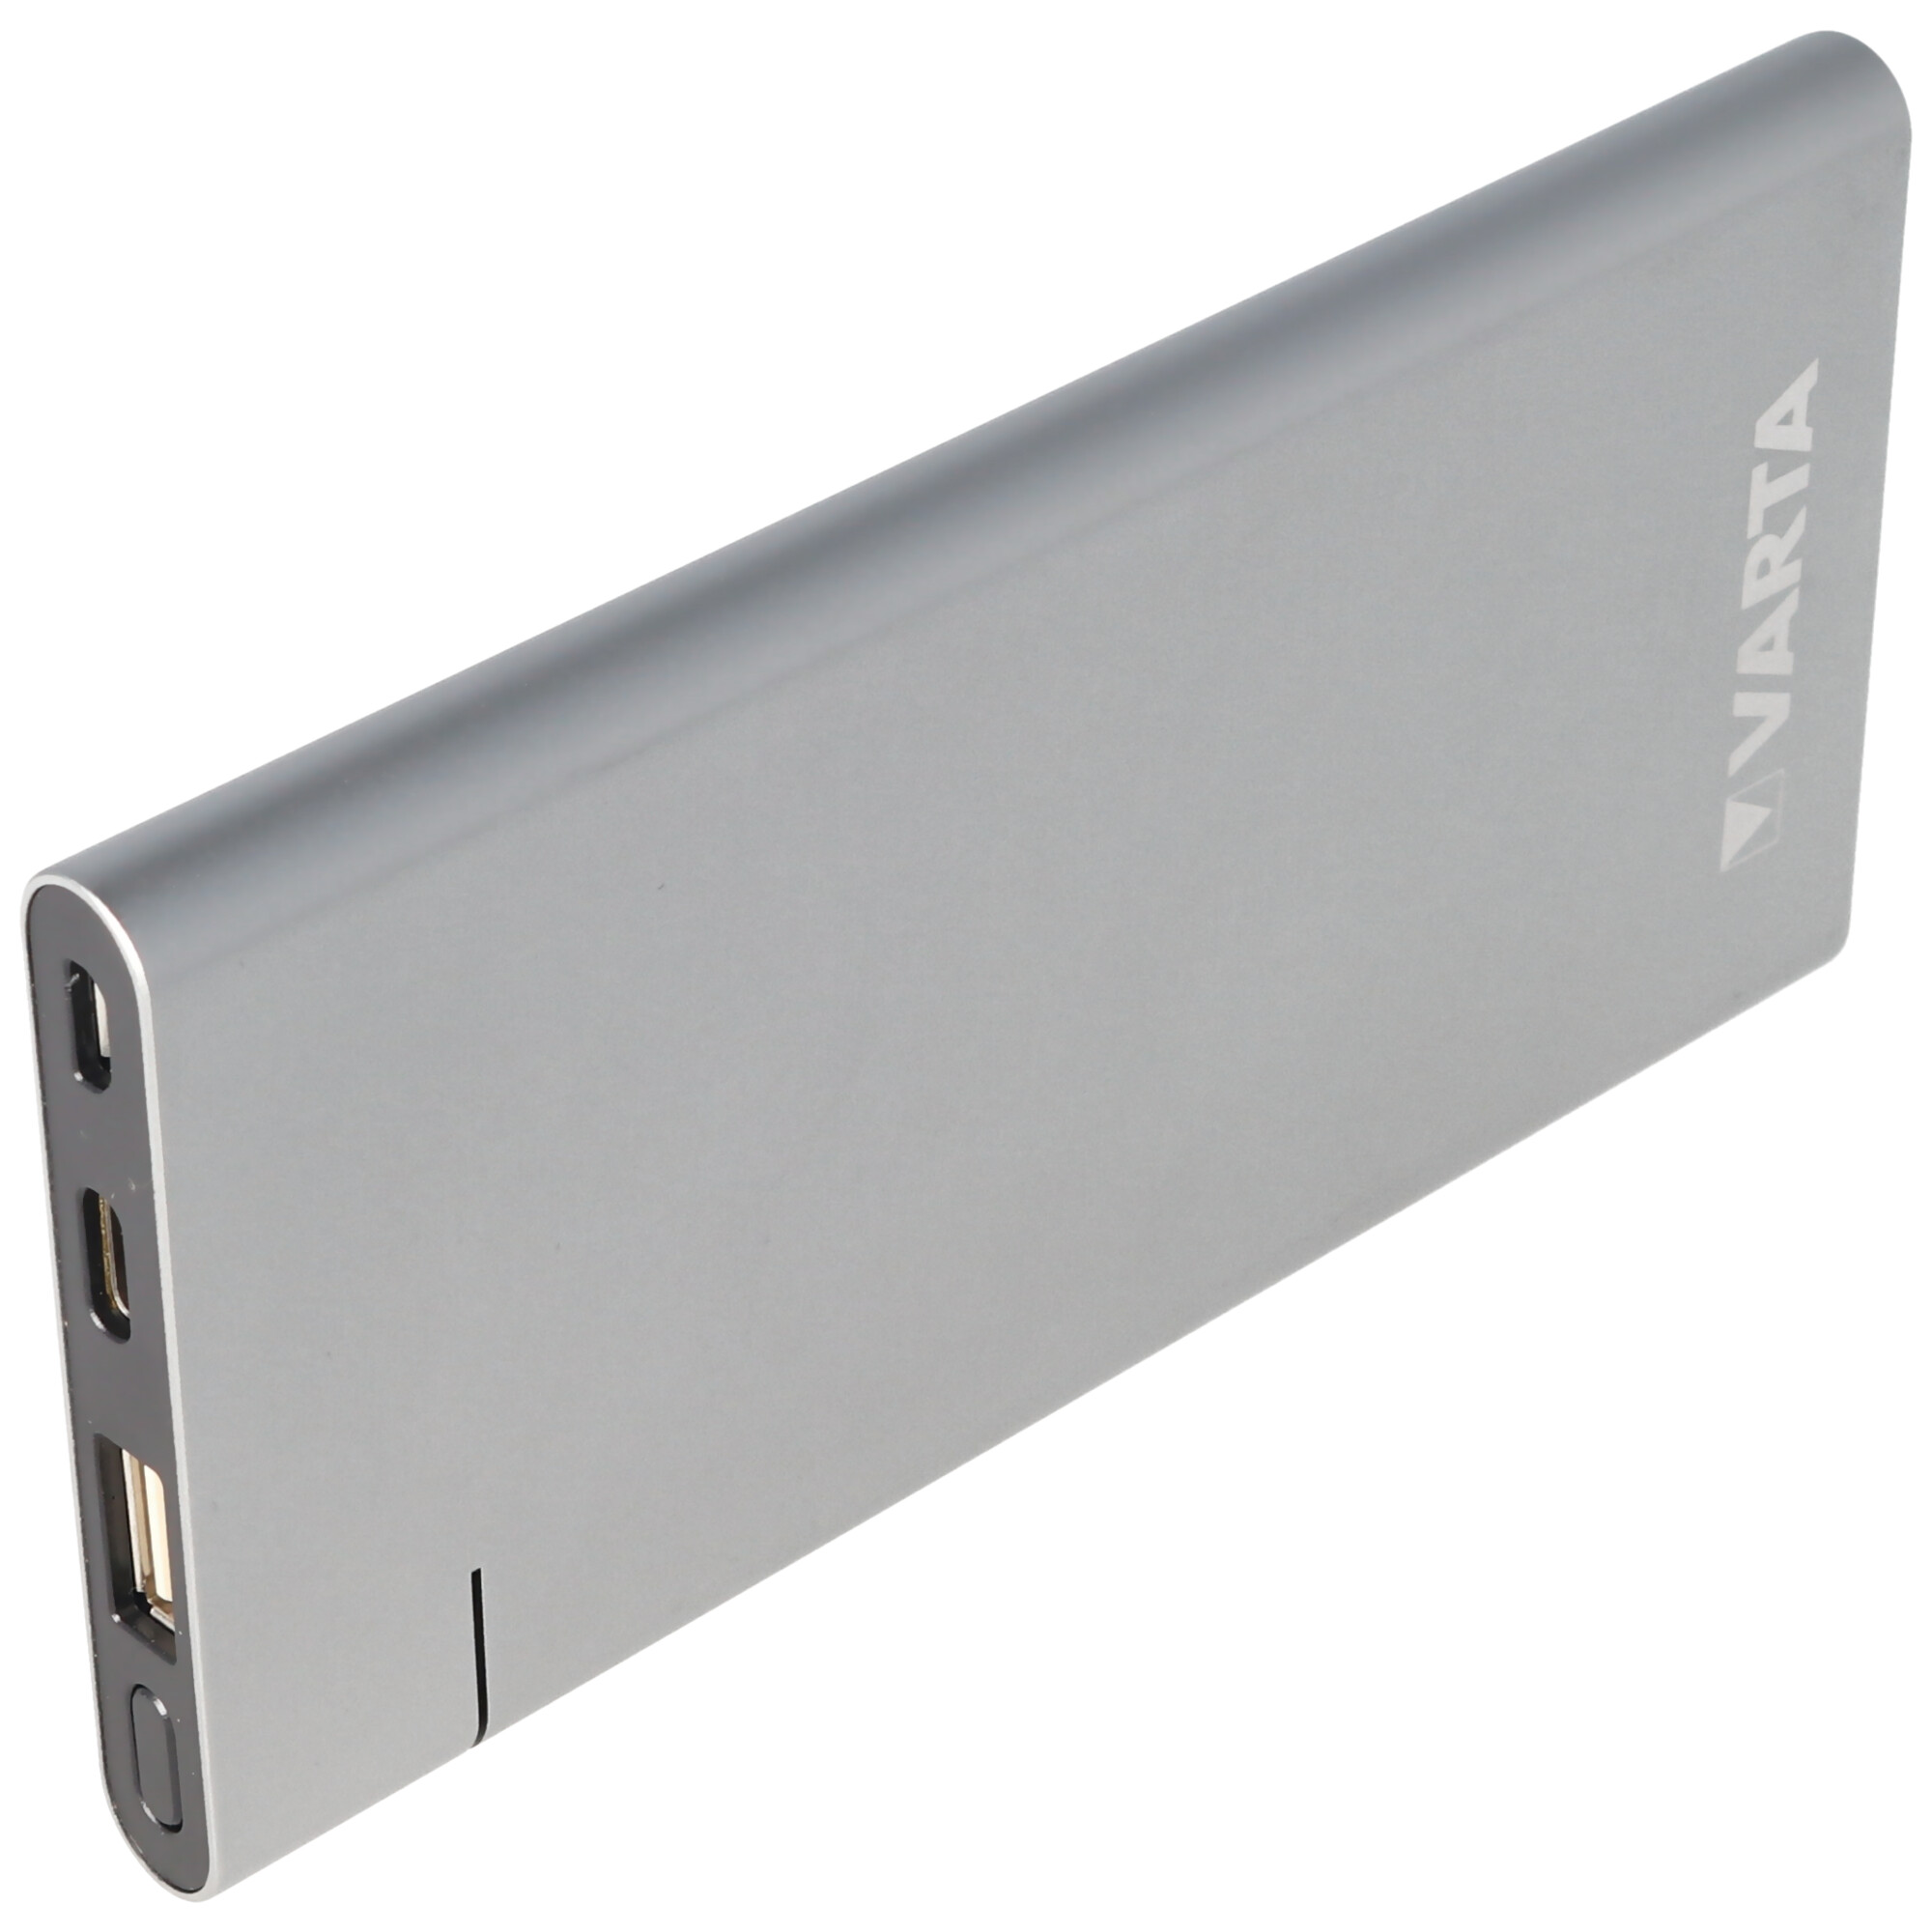 Varta Power Bank Slim silber 6000mAh, inklusive Micro USB-Ladekabel